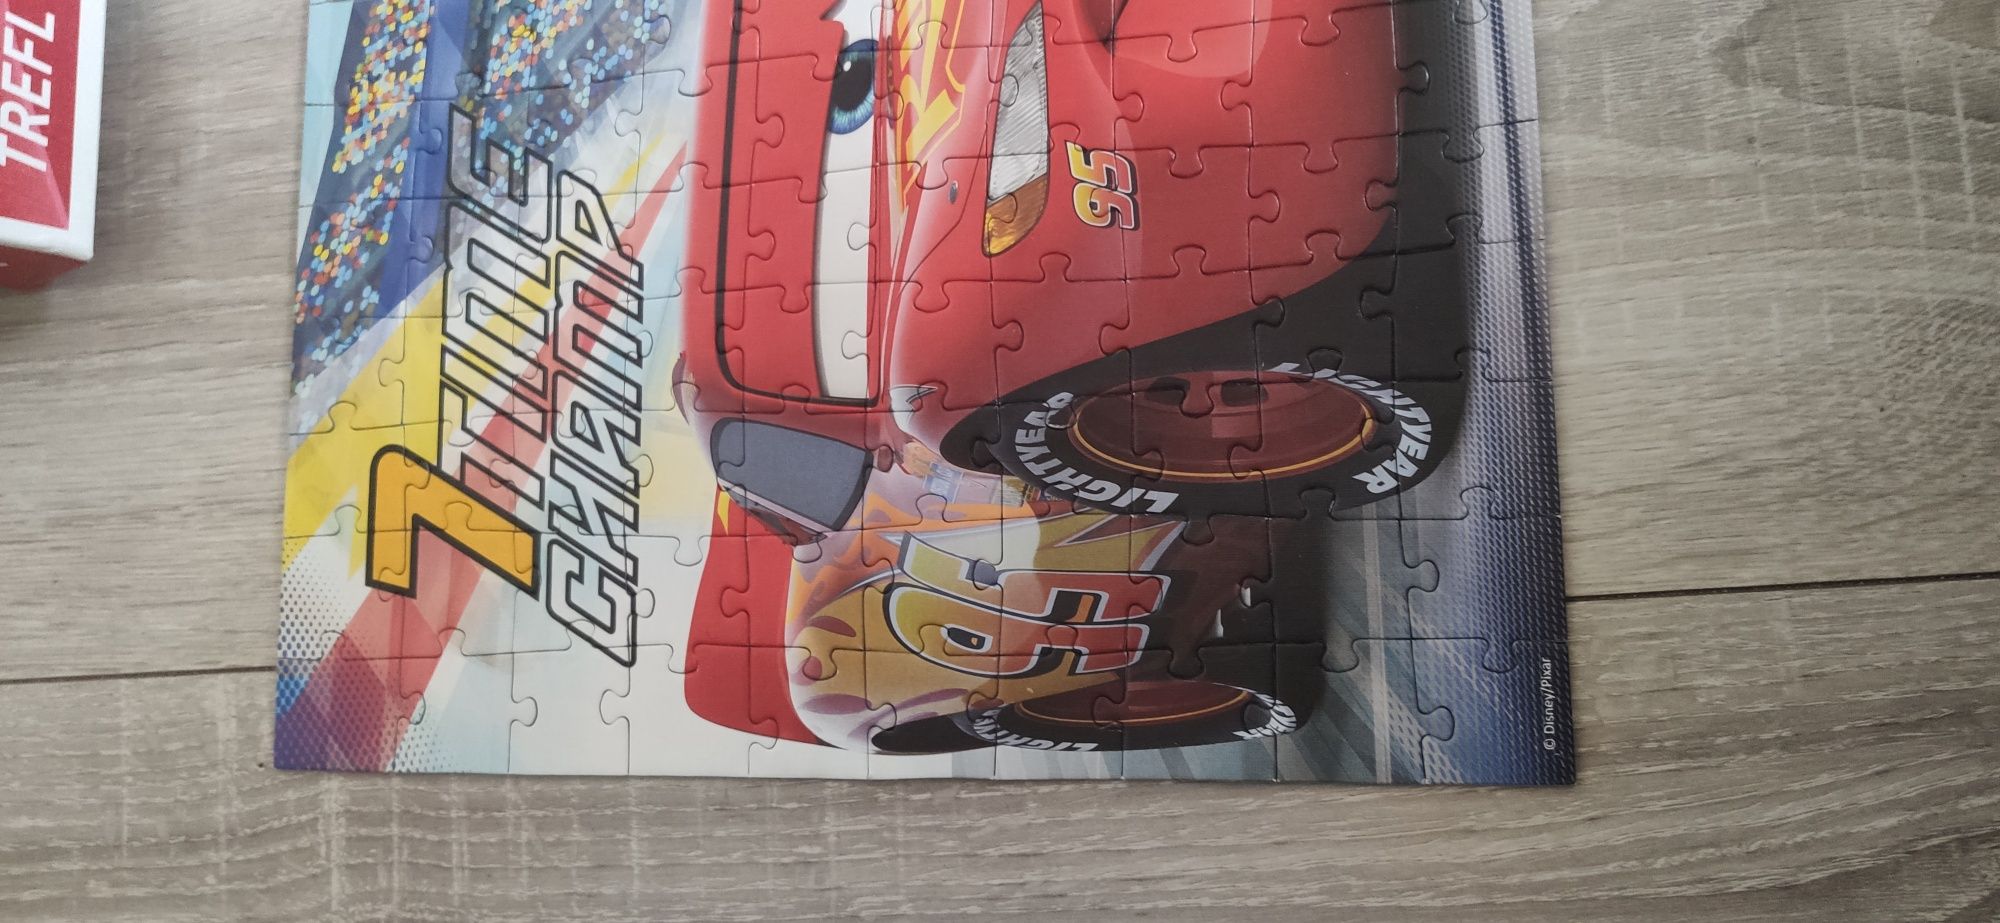 Puzzle Trefl 160 elementów Cars Auta Disney Pixar 6+